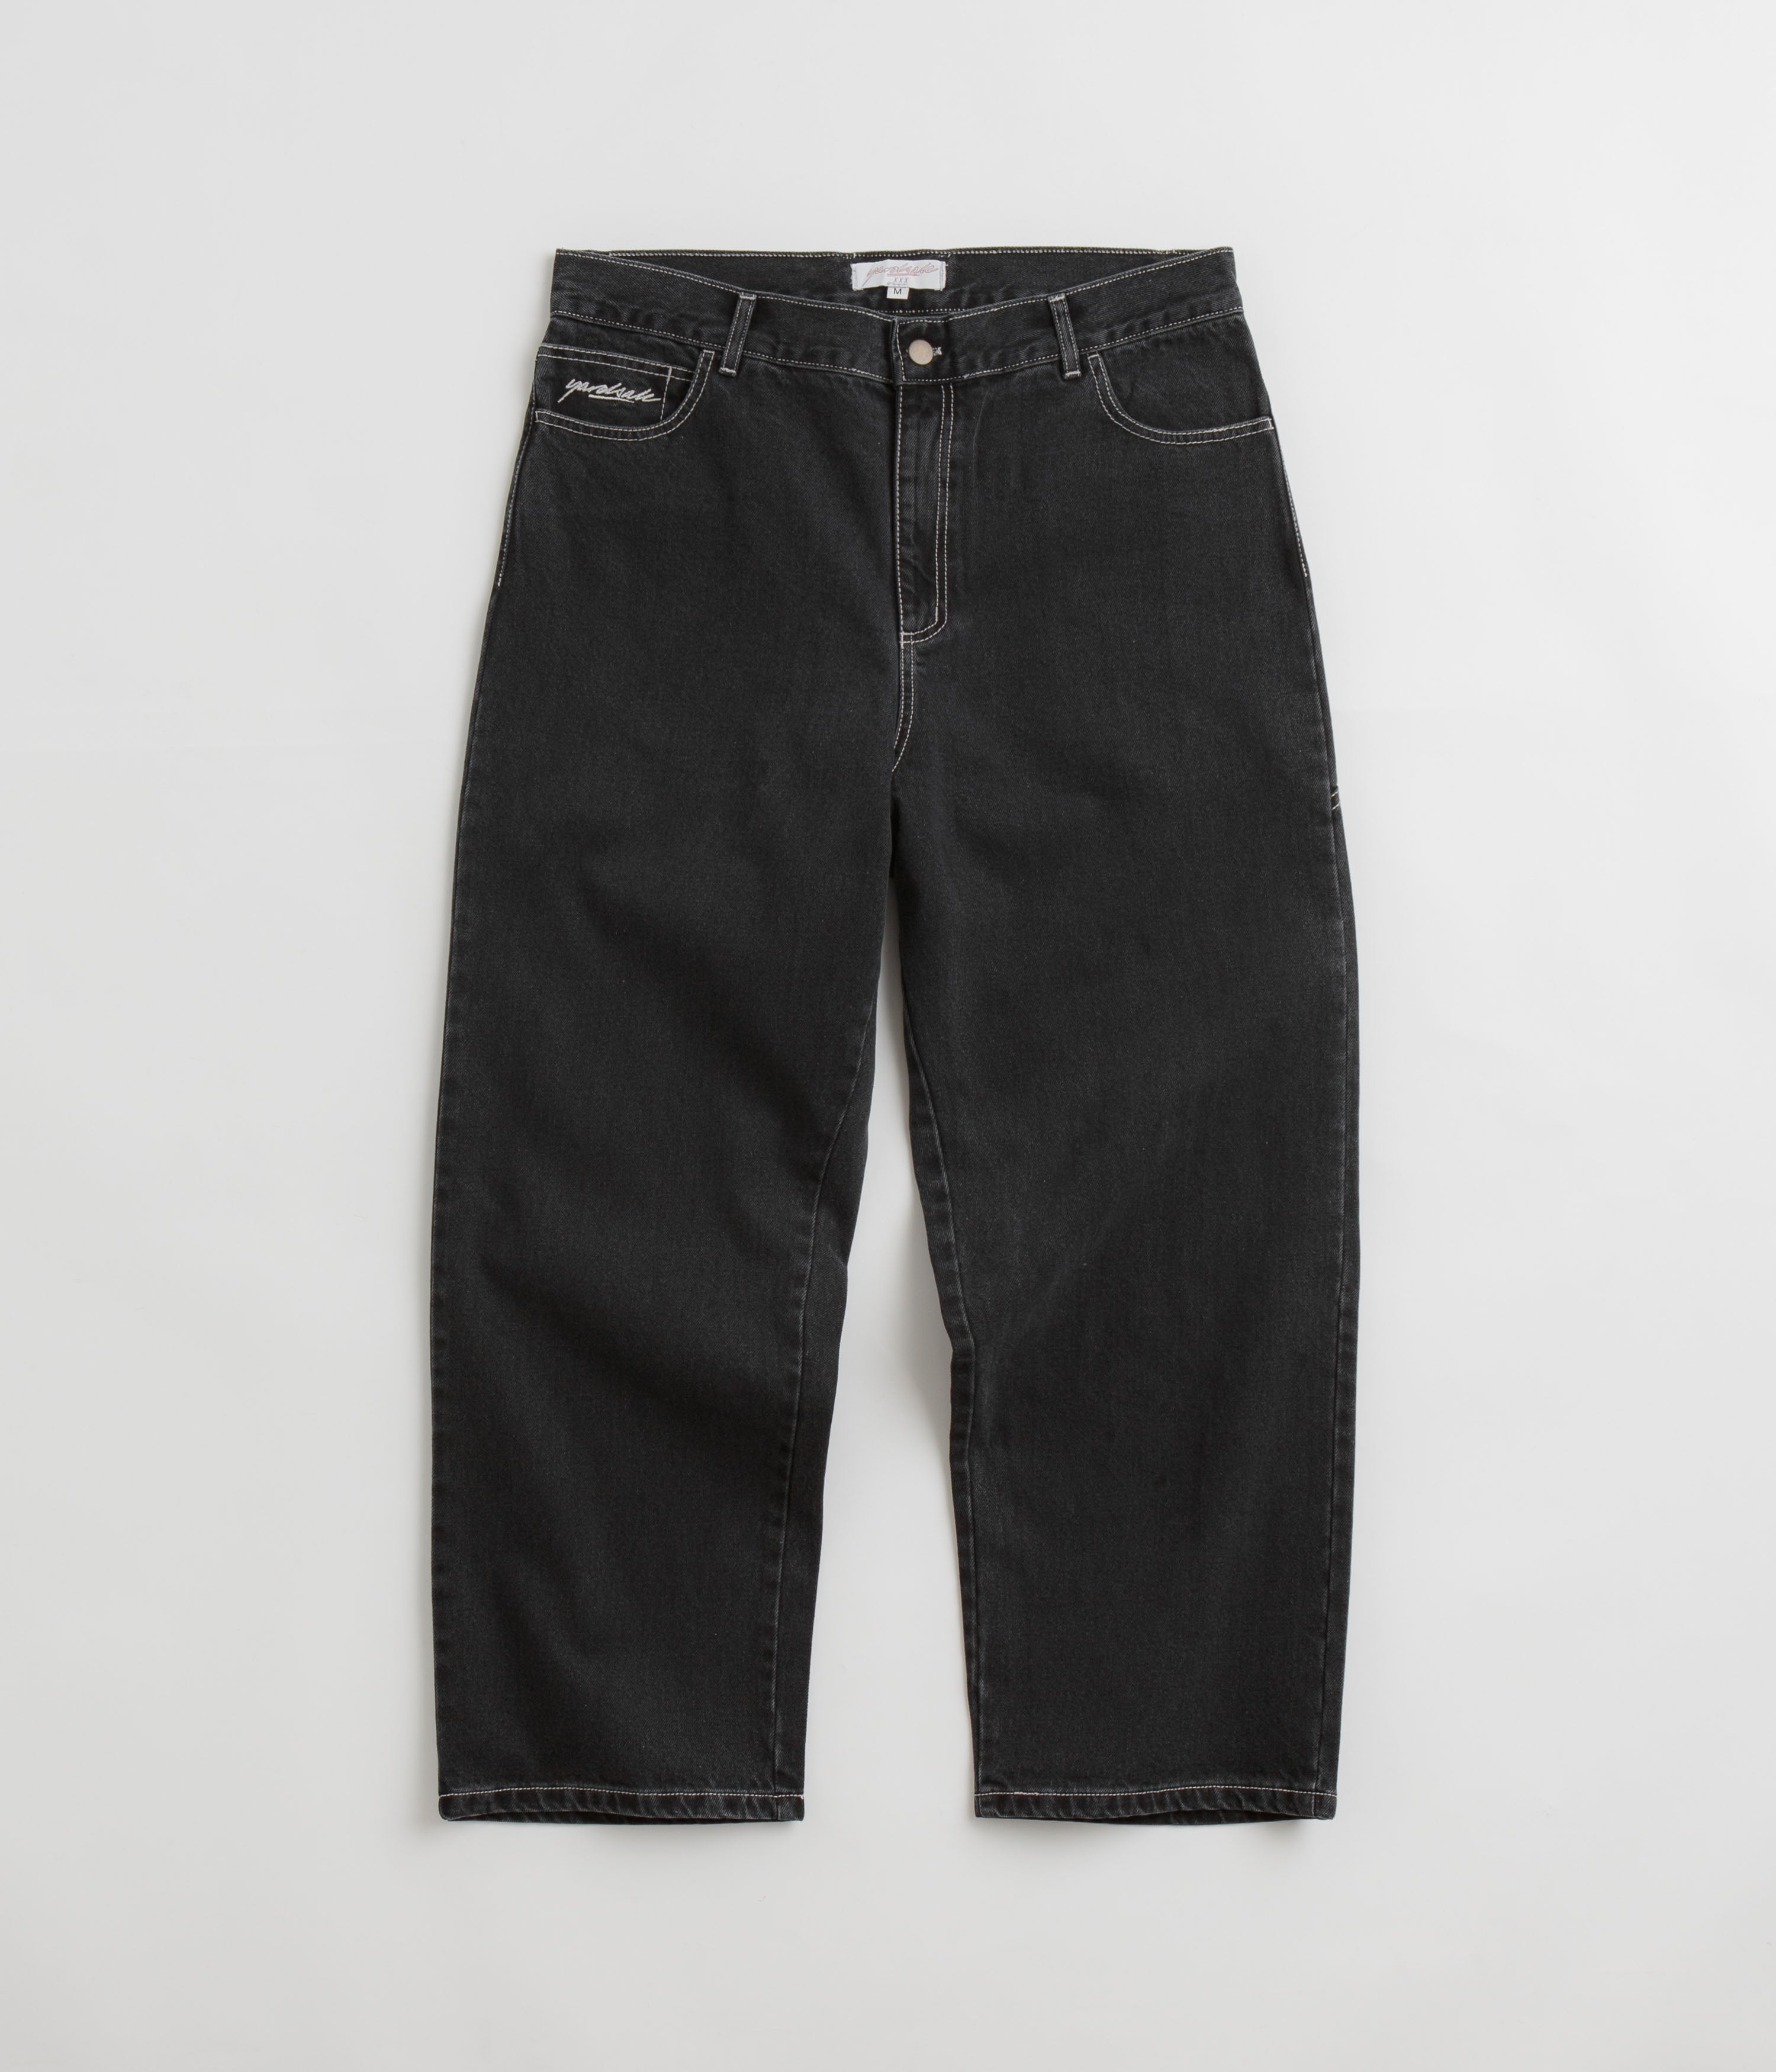 Yardsale Ripper Jeans - Denim | Flatspot